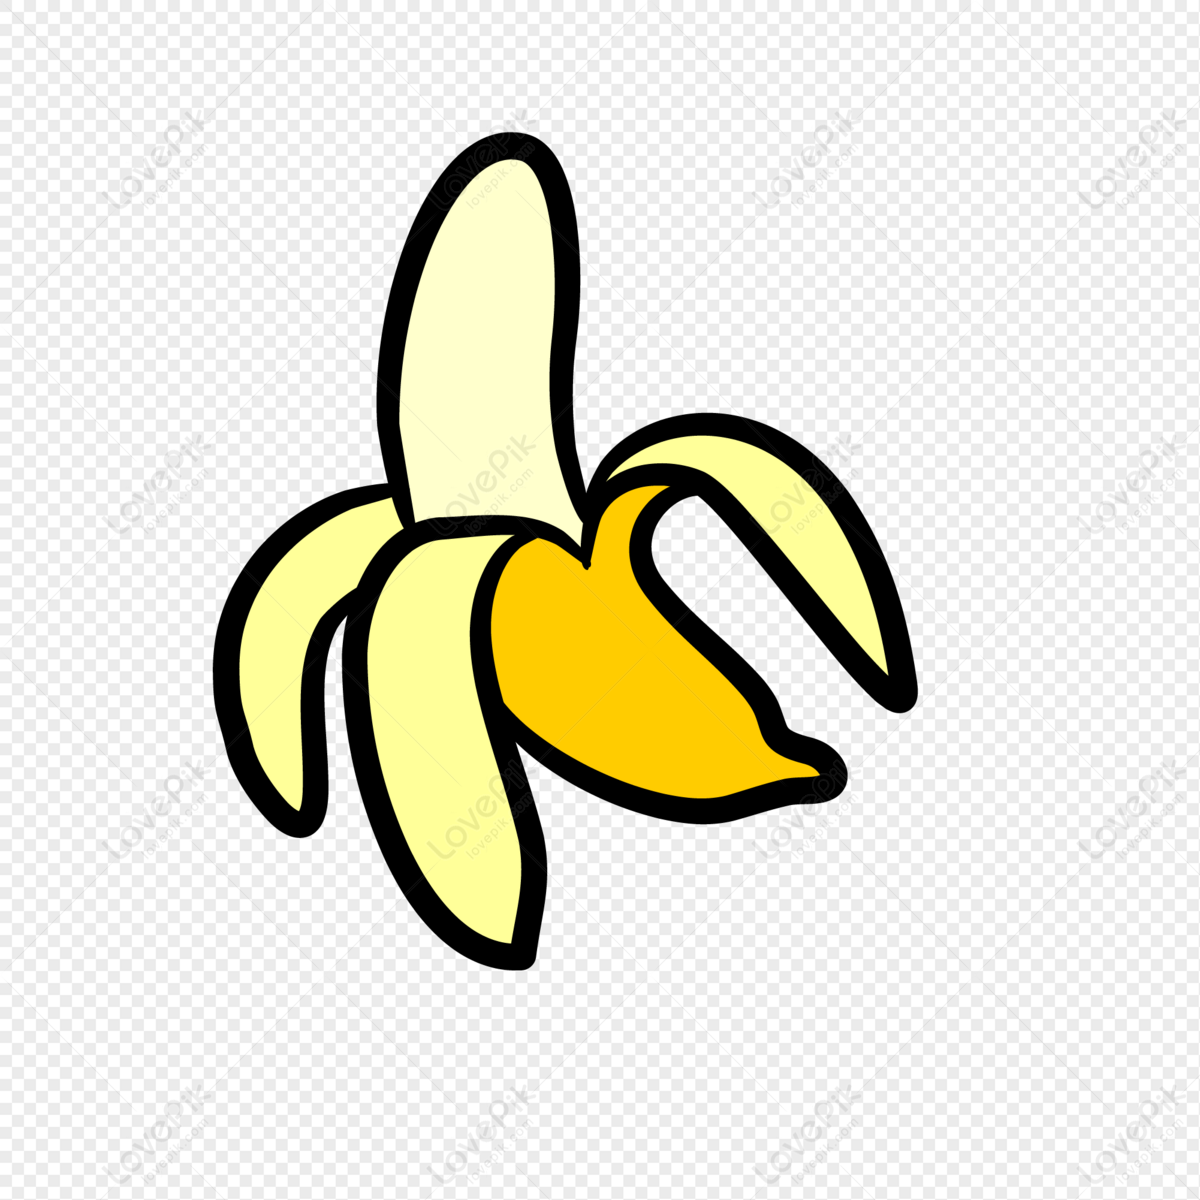 Green banana icon - Free green fruit icons